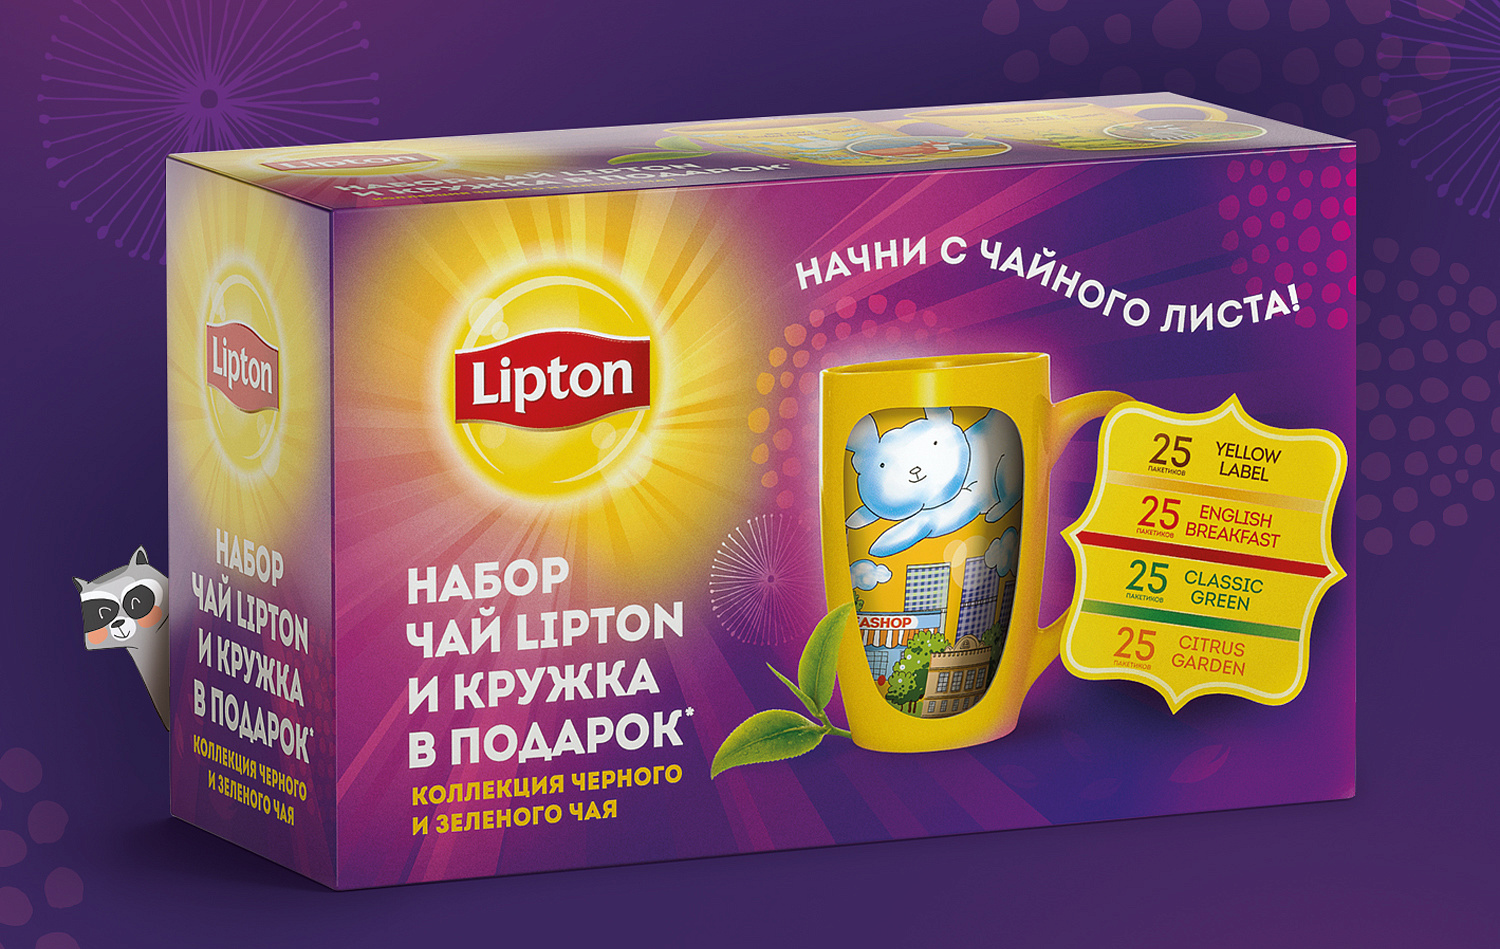 Lipton with Promo Mug '17 - Портфолио Depot